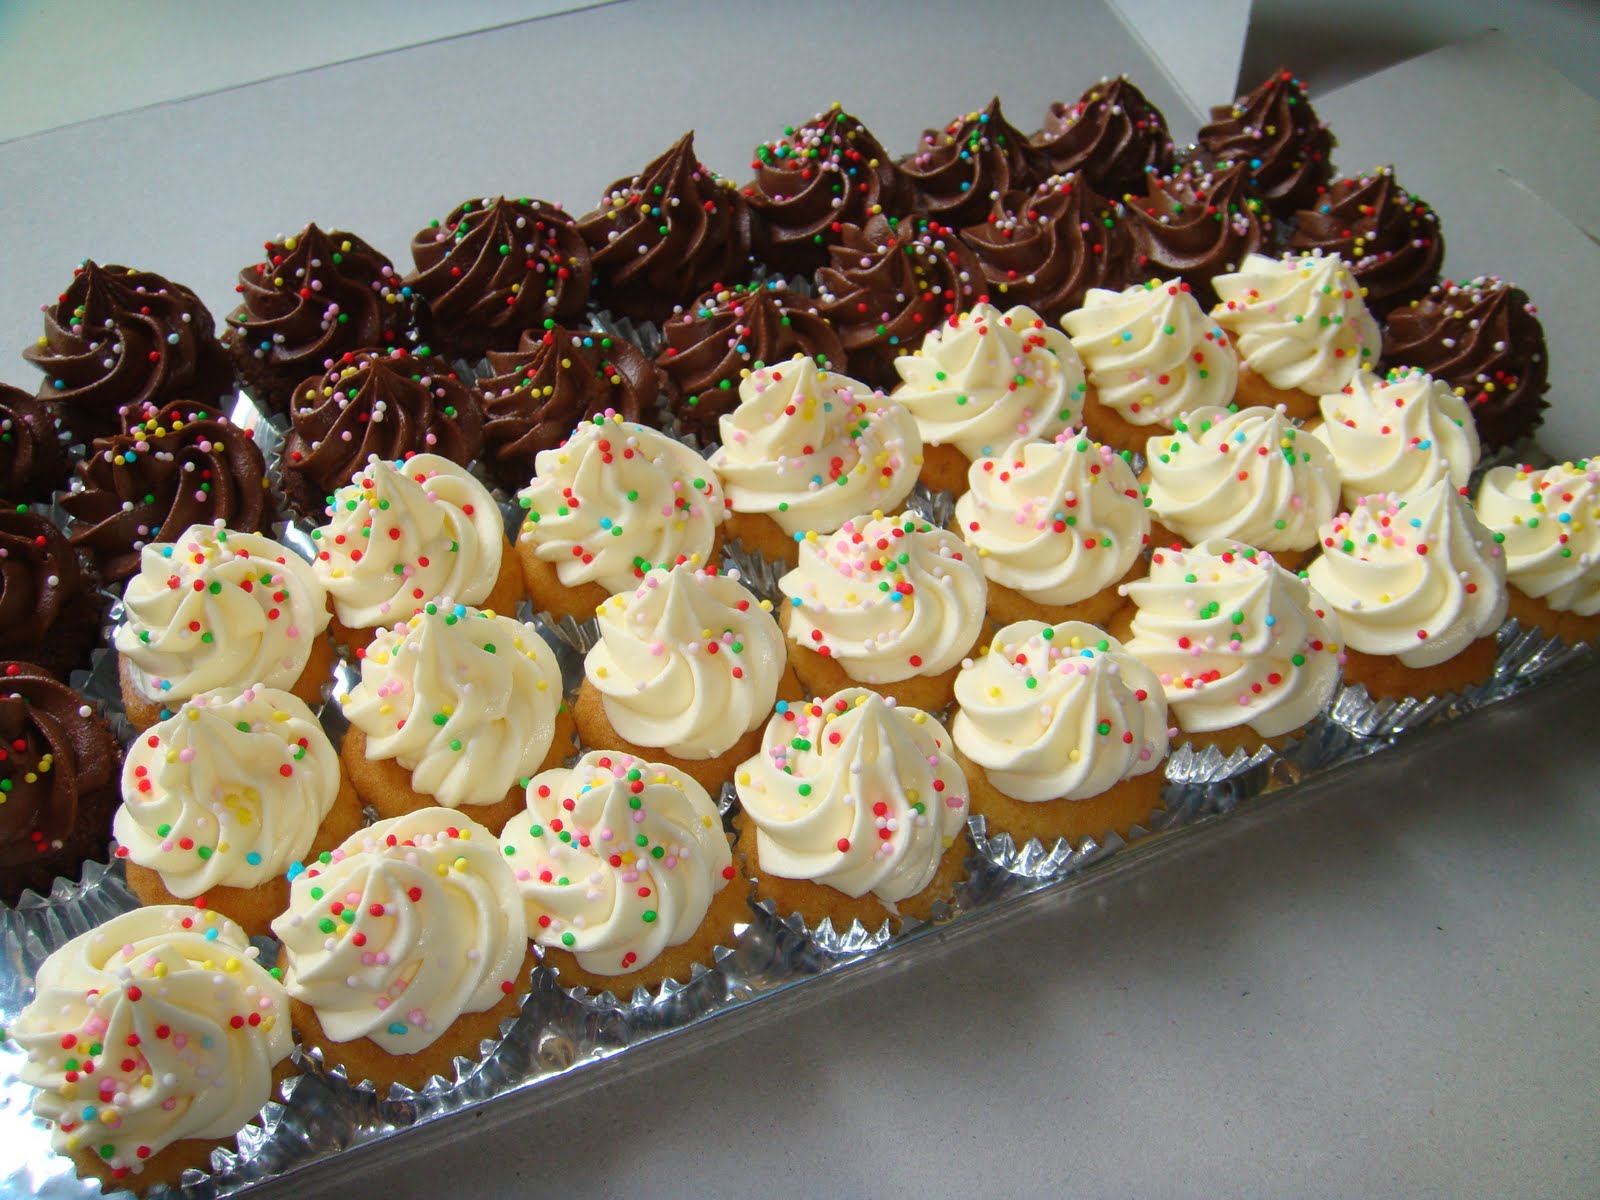 15 Healthy Baking Mini Cupcakes – Easy Recipes To Make at Home